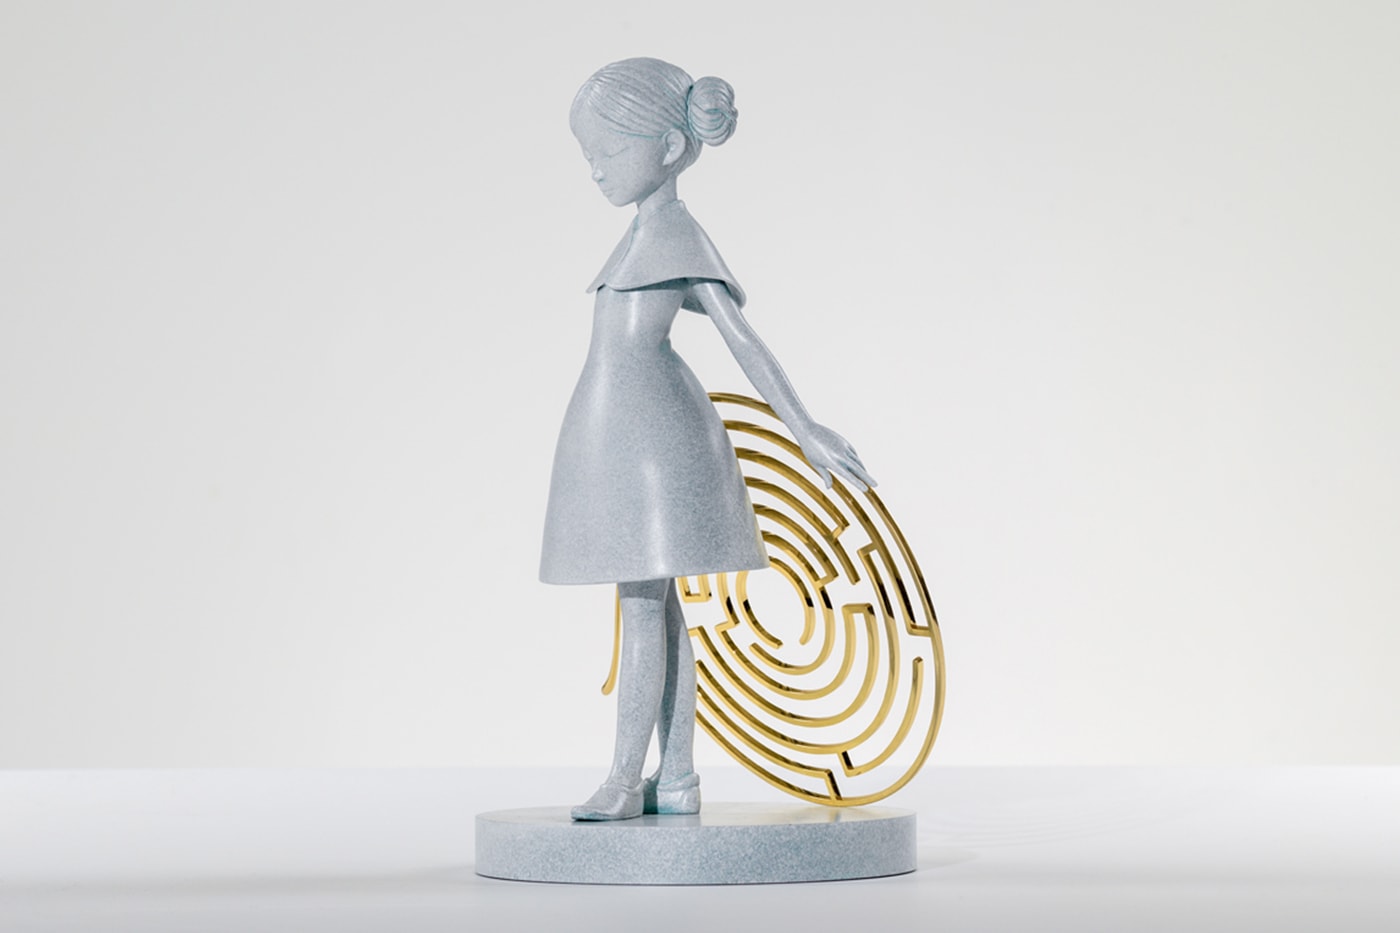 James jean maze bronze sculpture avant arte release info gold plated stainless steel Little Dancer homage